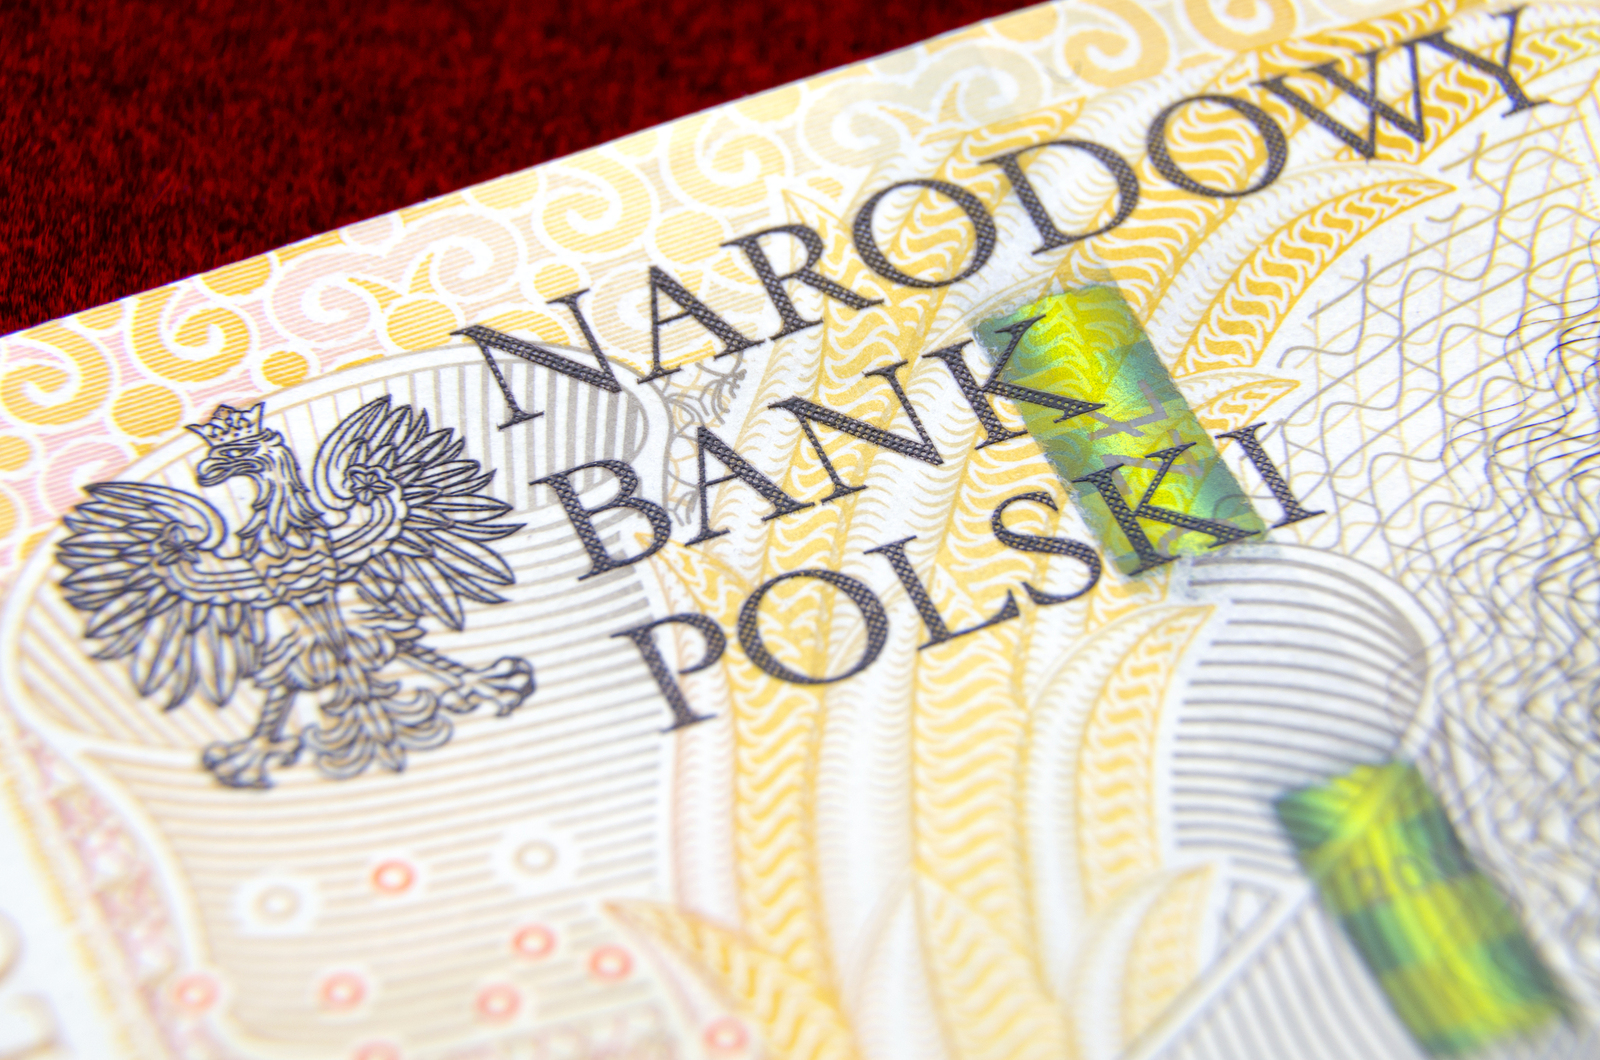 Money of National Bank of Poland. Polish zloty banknote on red velvet background; Macro photo; Depth of field